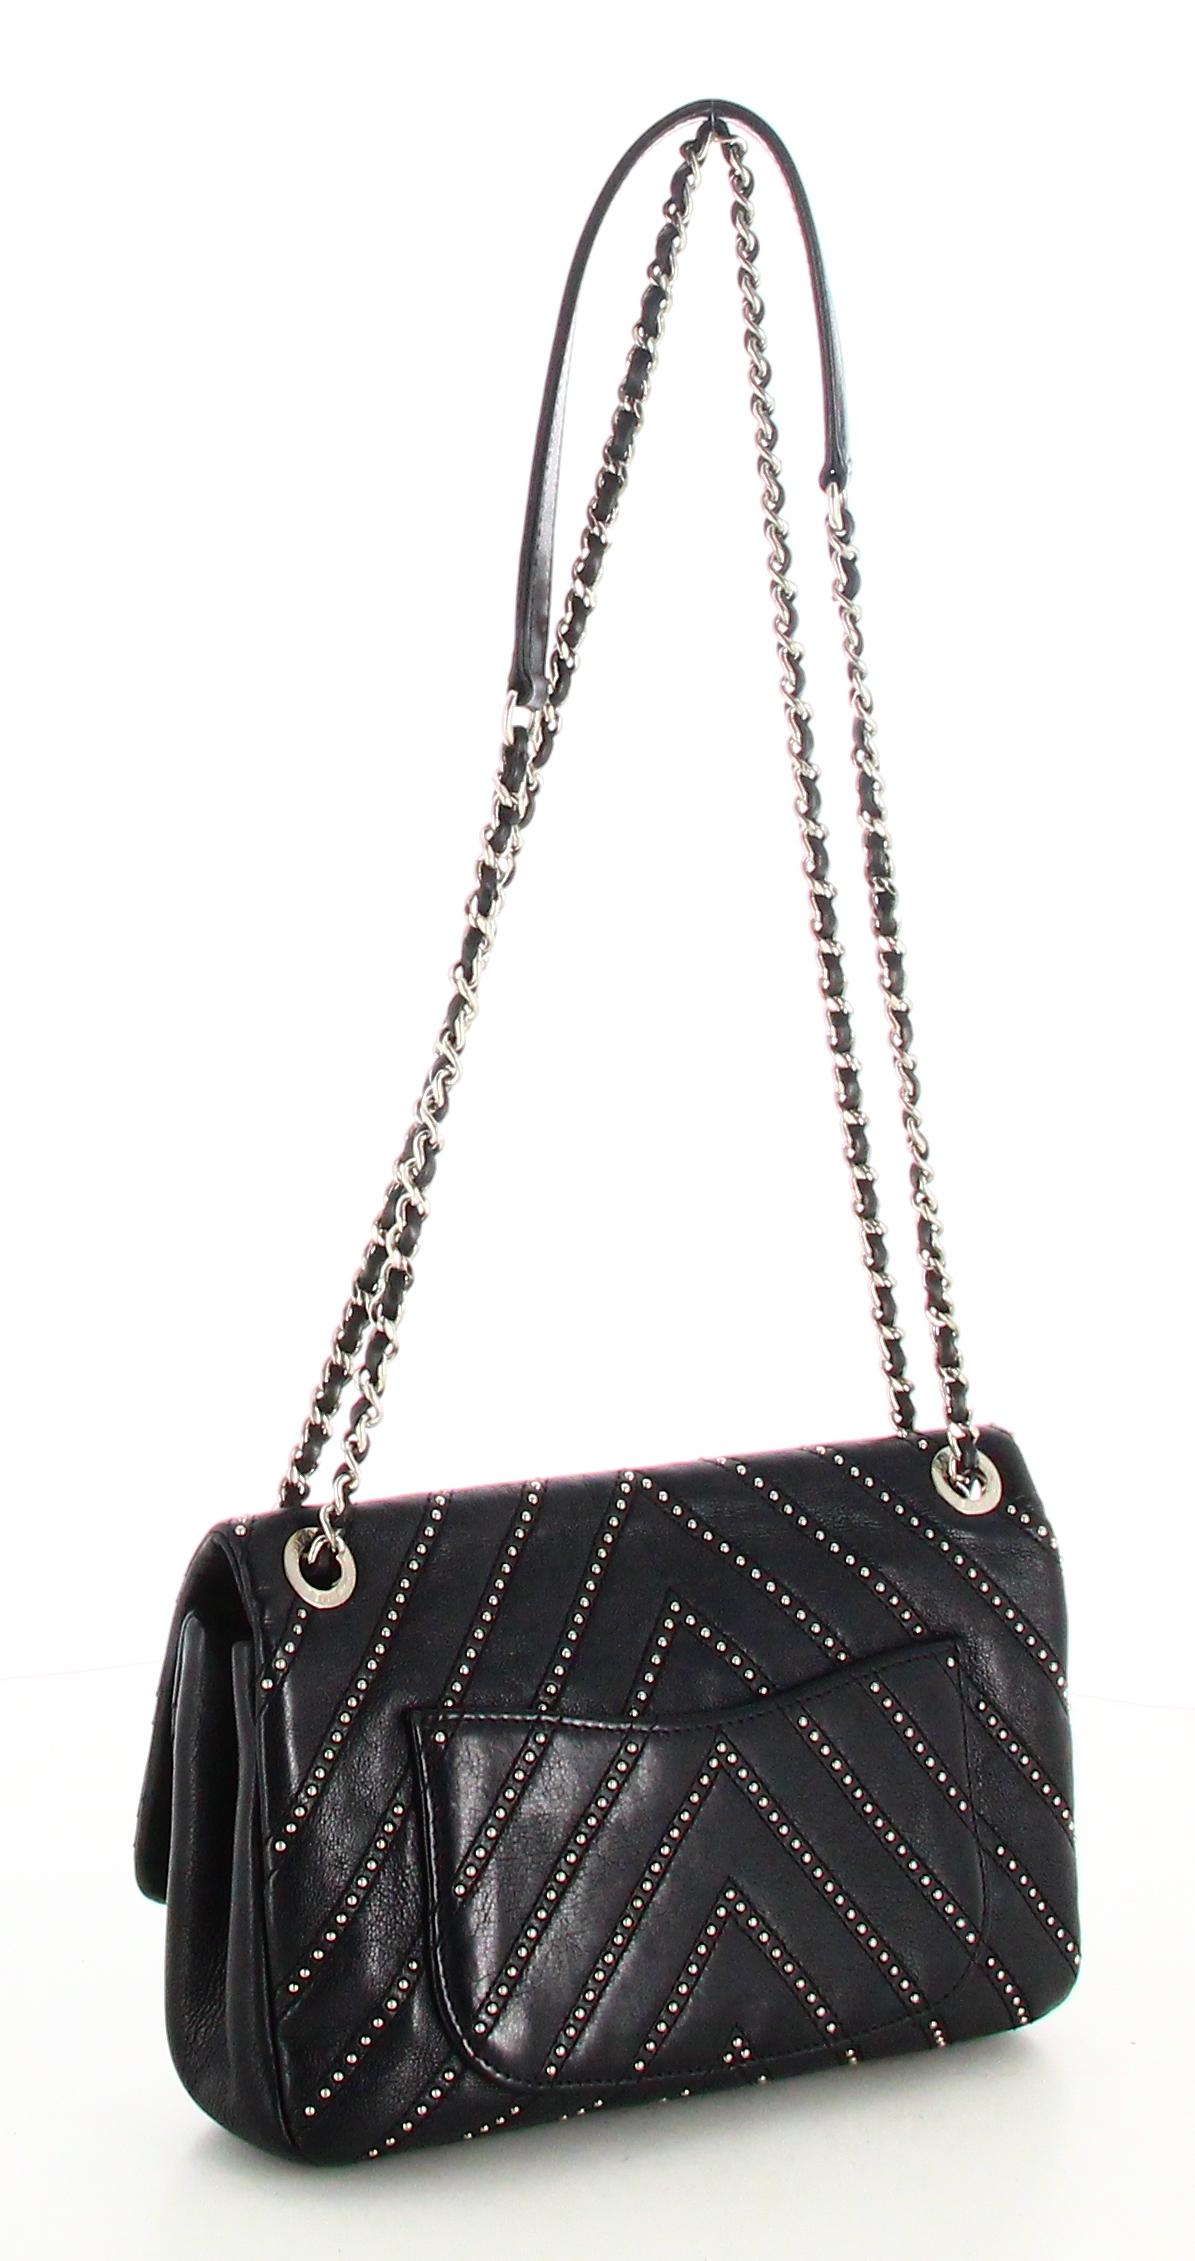 Women's or Men's 2017 Chanel Mini Handbag Chevron Stud Wars Flap Leather Black For Sale